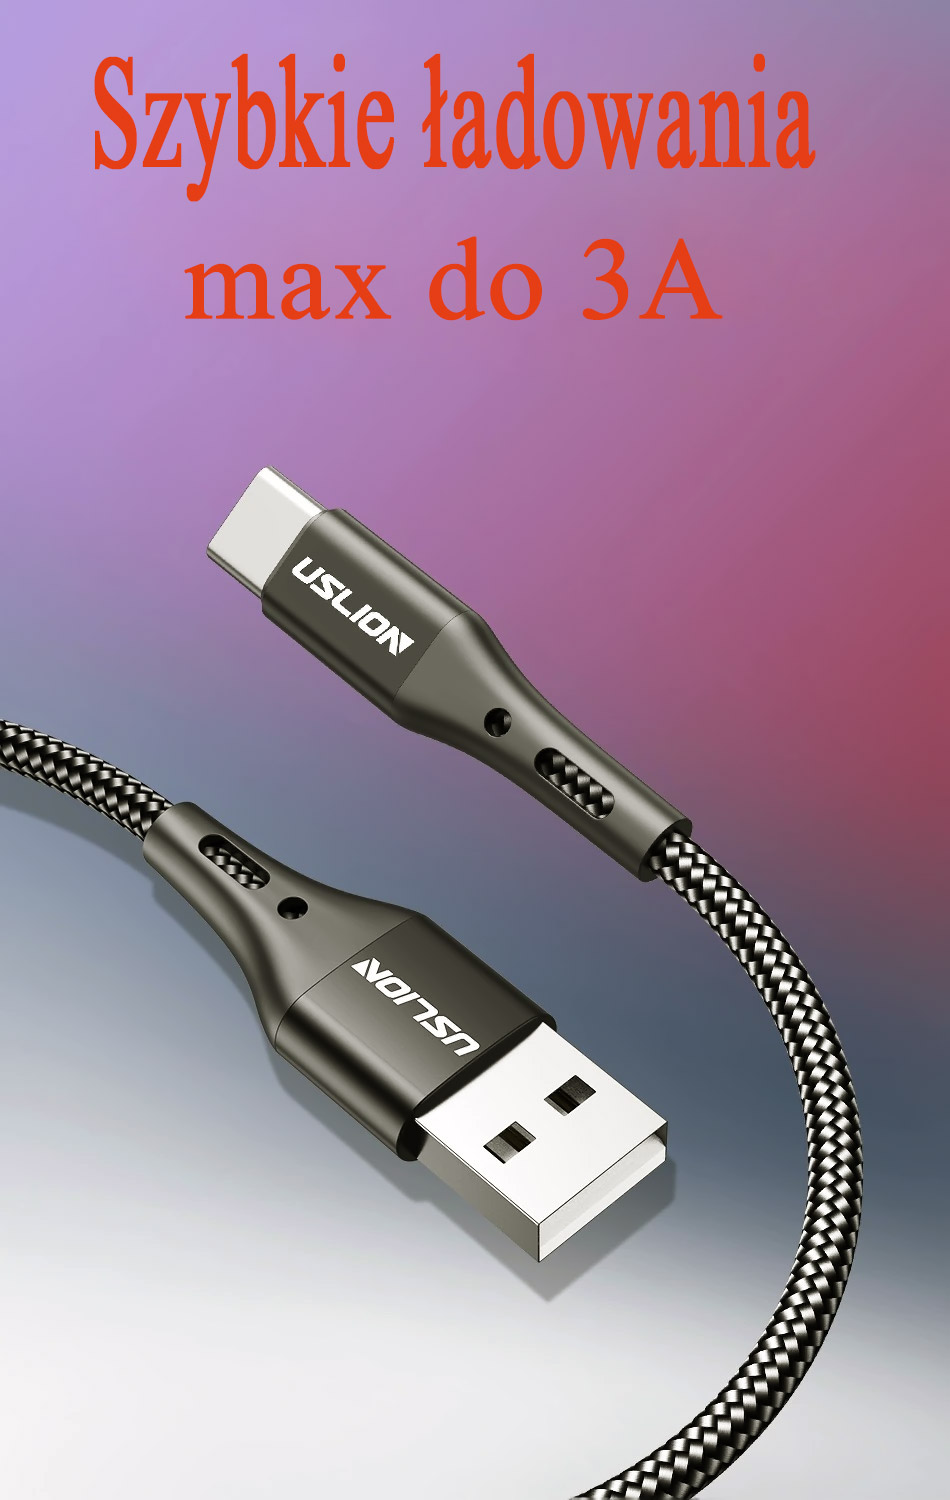 Kable USB szybkiego ładowania